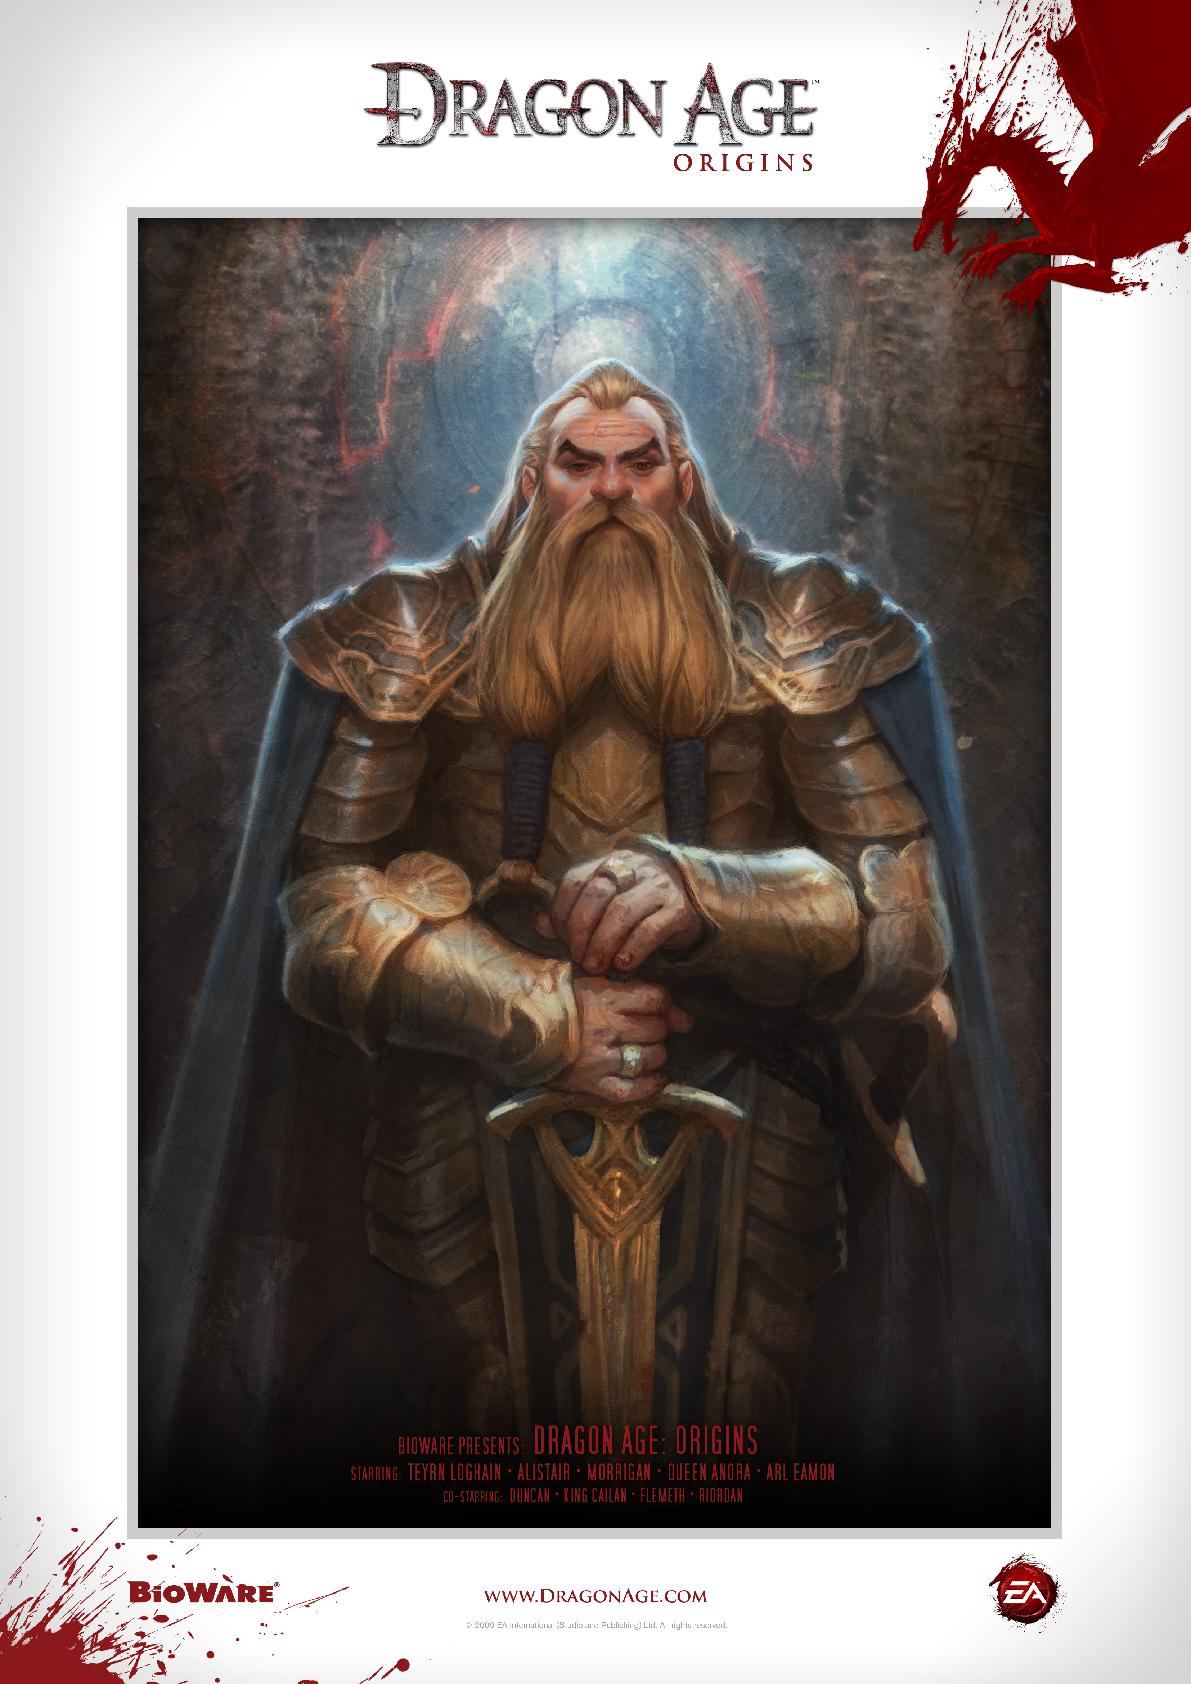 Guide for Dragon Age: Origins - Dwarf Noble Origin